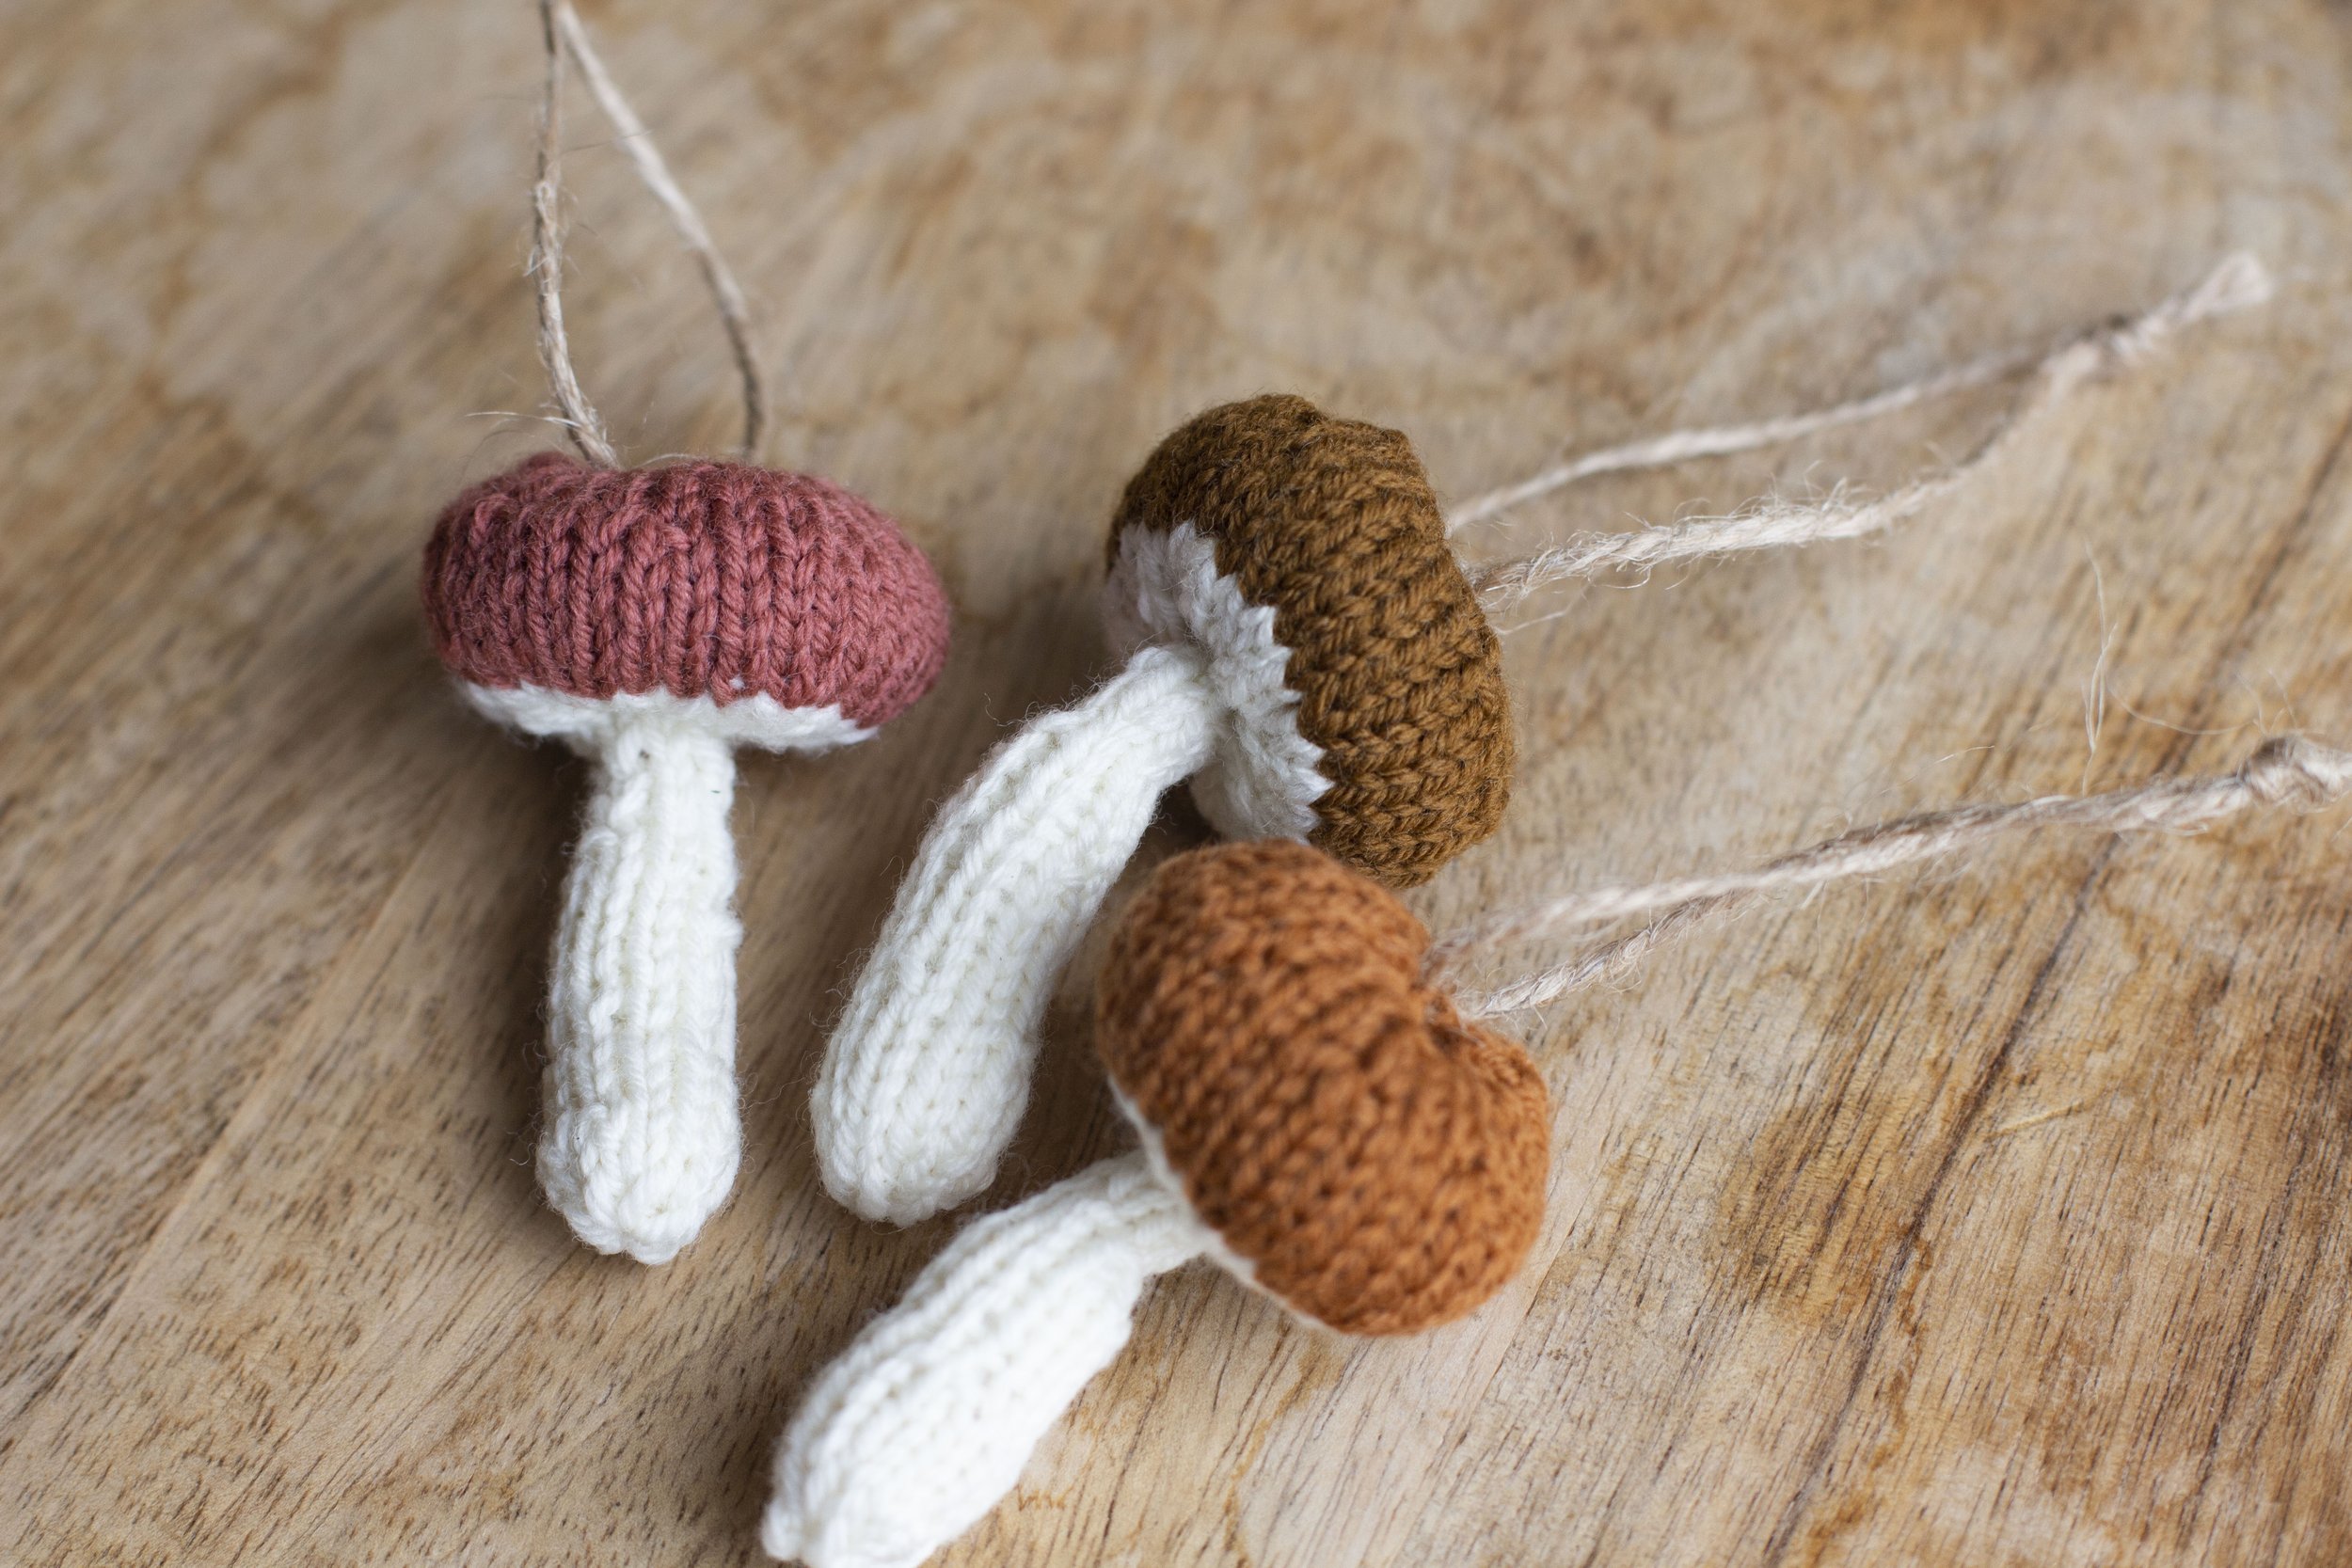 Wool felt mushroom wall hanging in a 4 inch embroidery hoop